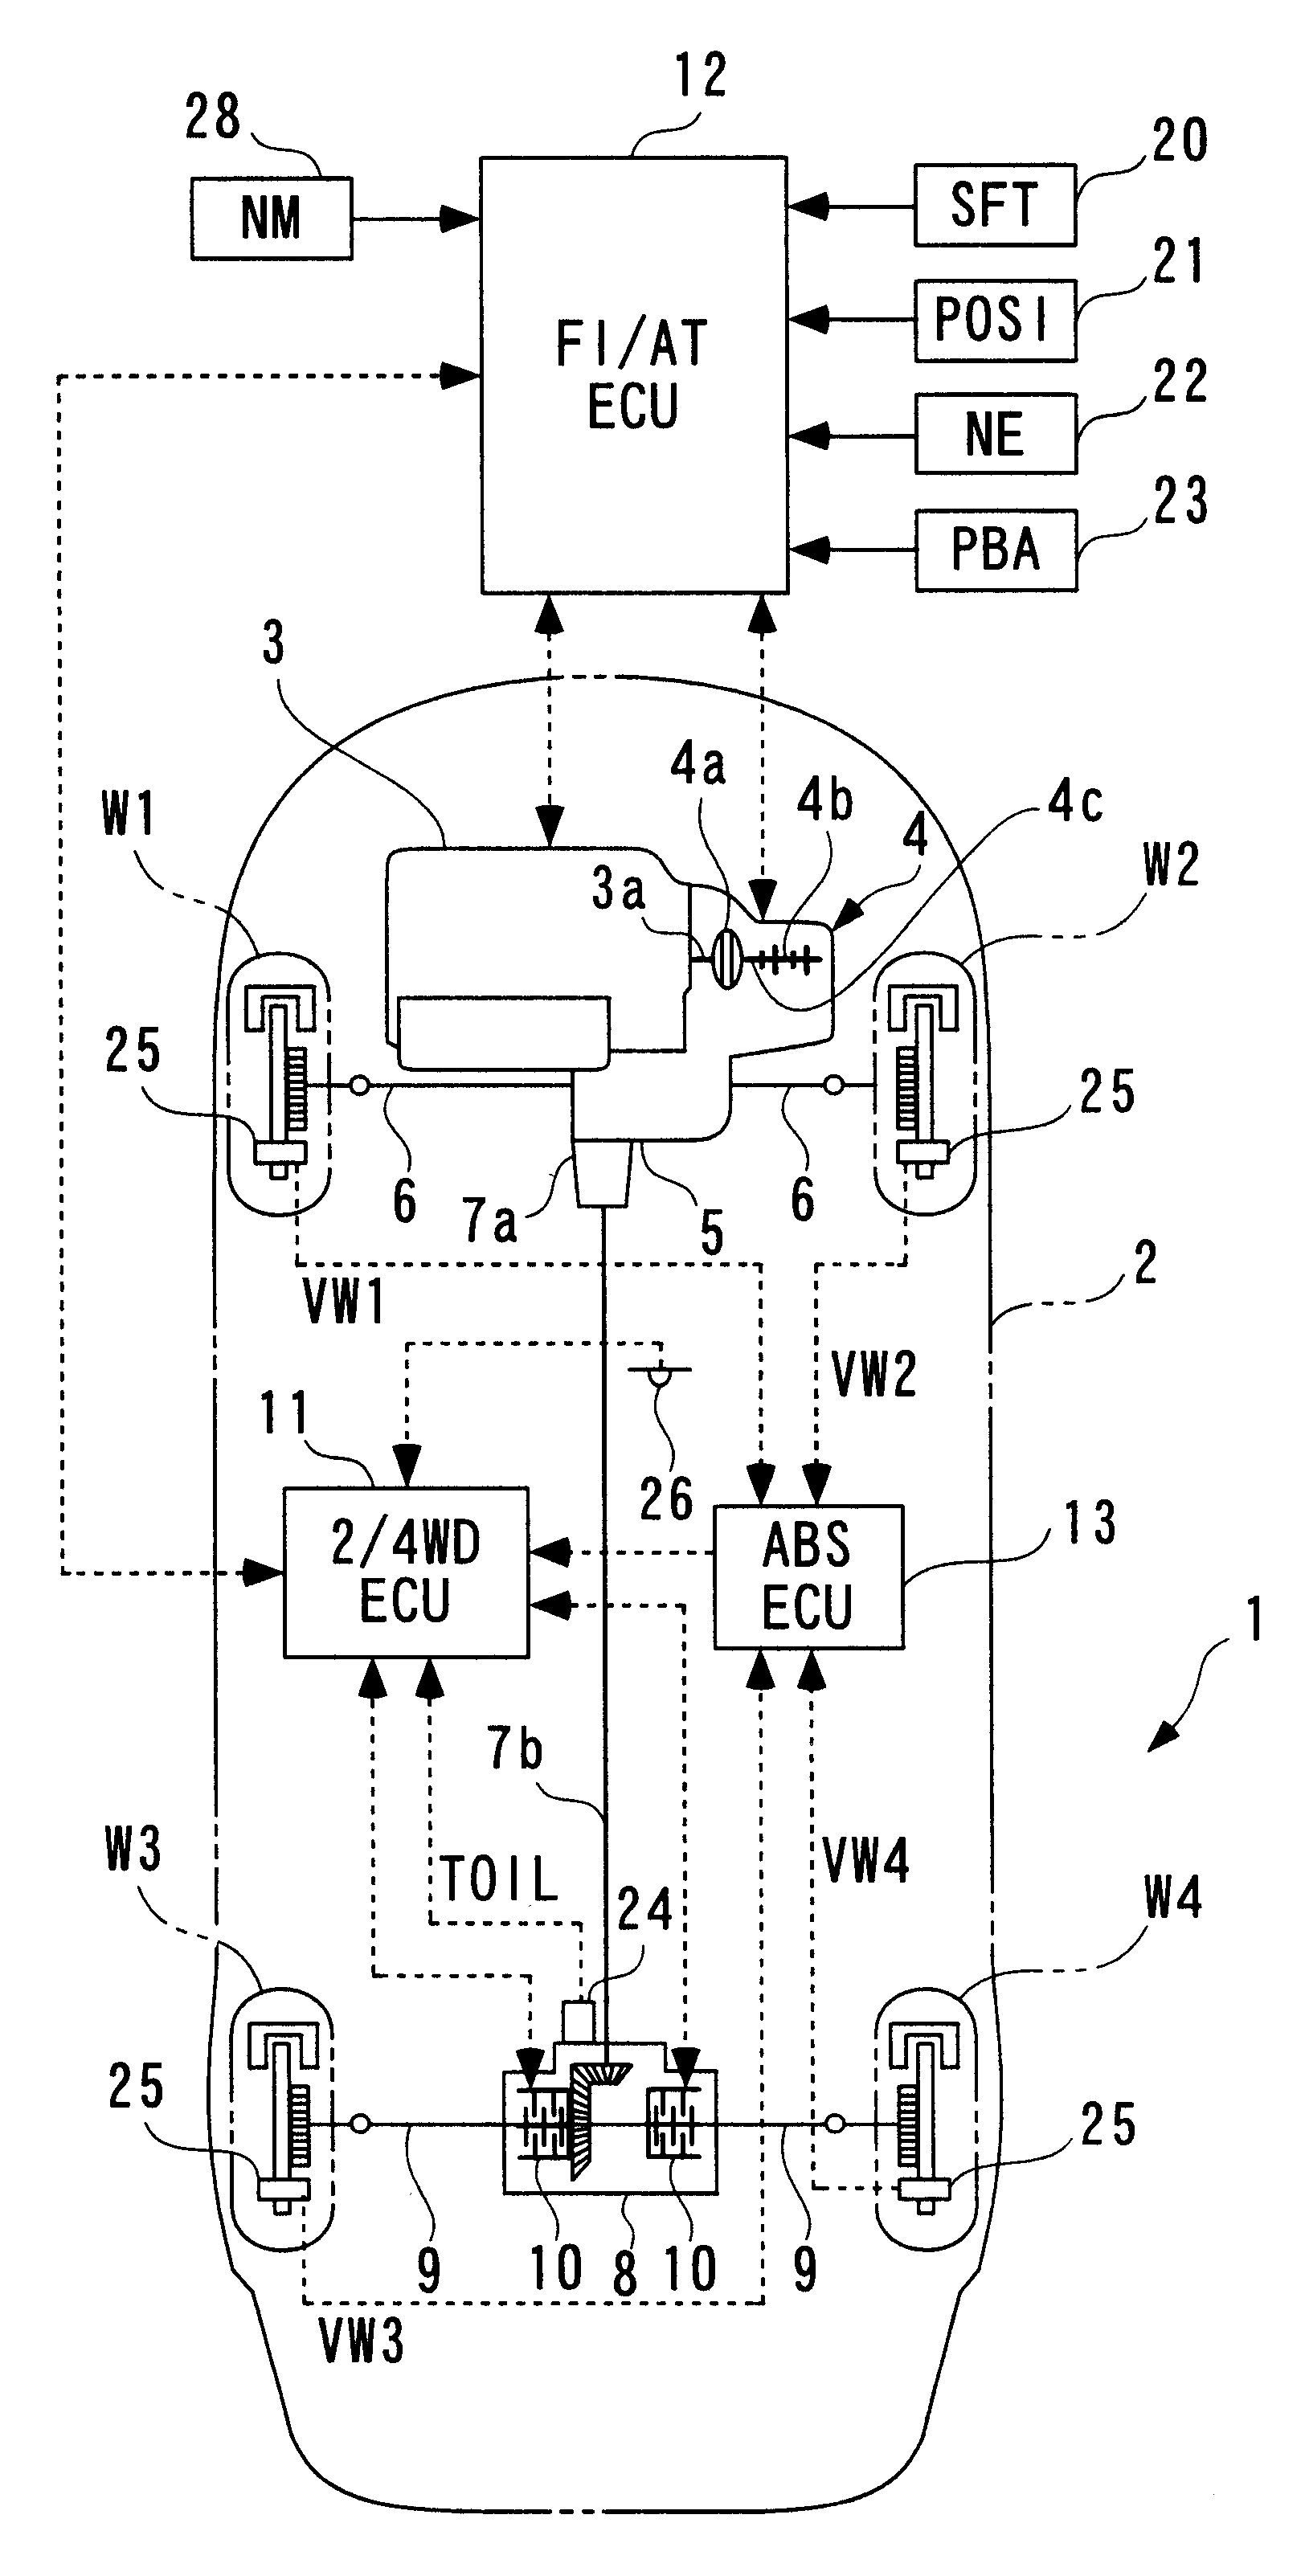 Apparatus for determining a failure of wheel speed sensors